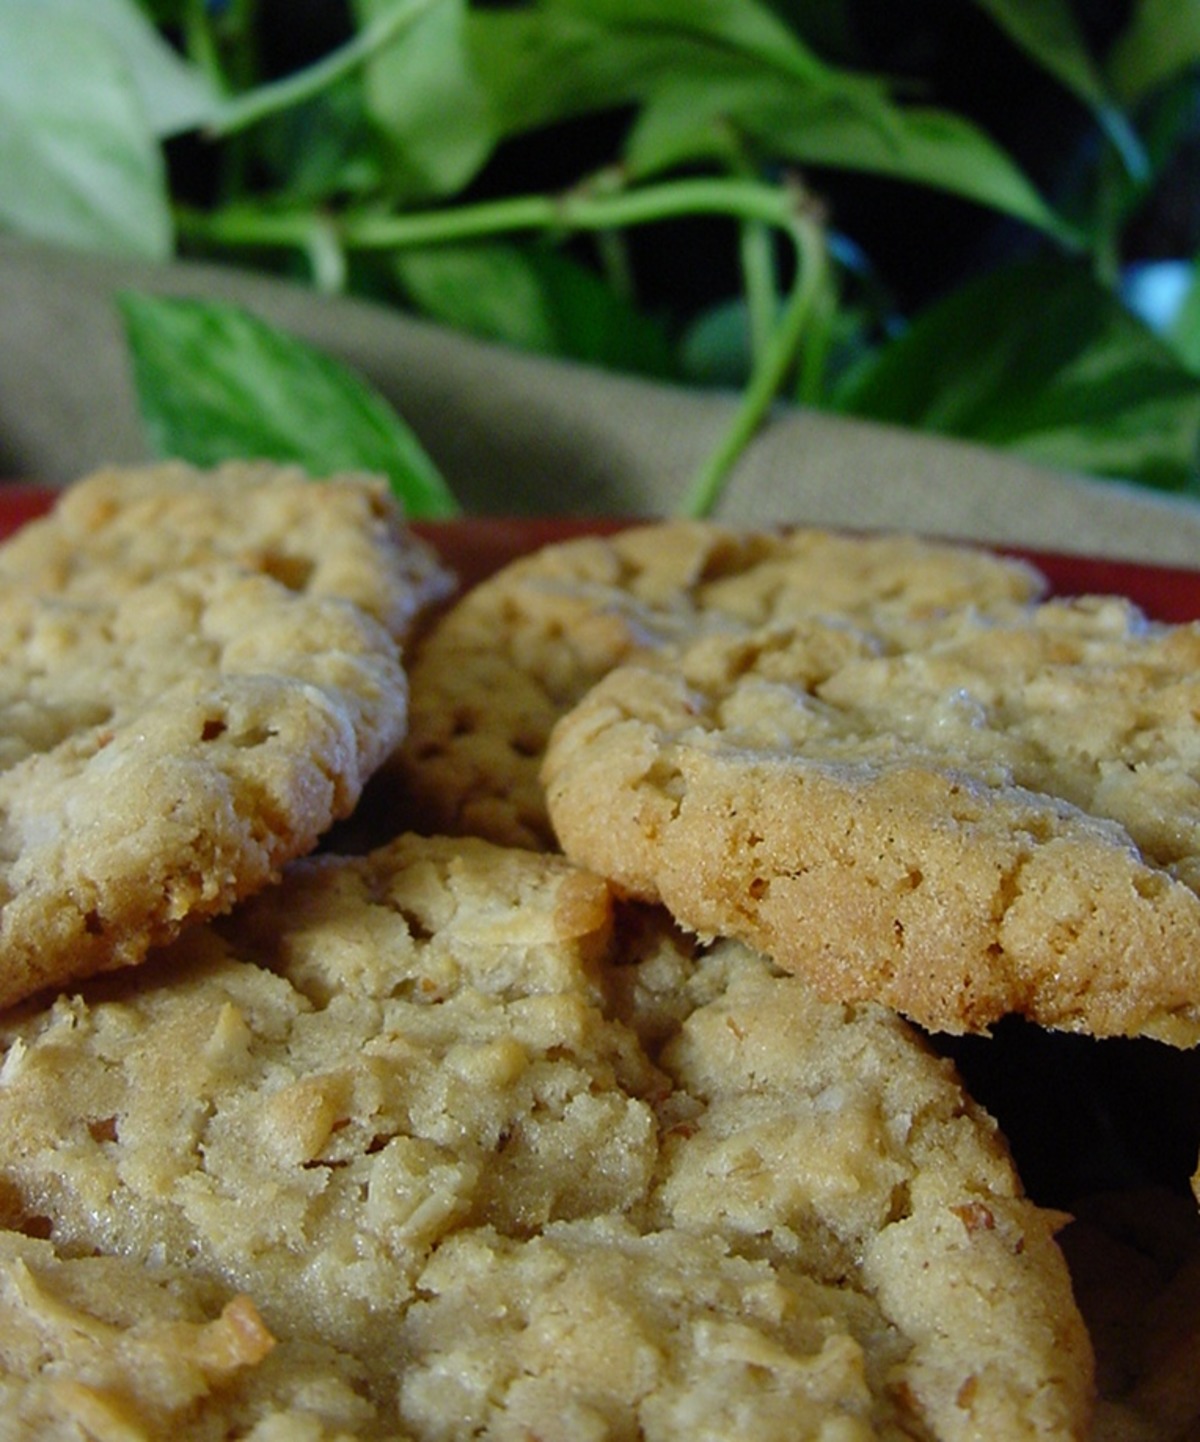 Shortbread cookies recipeCountry Cupboard Cookies recipes